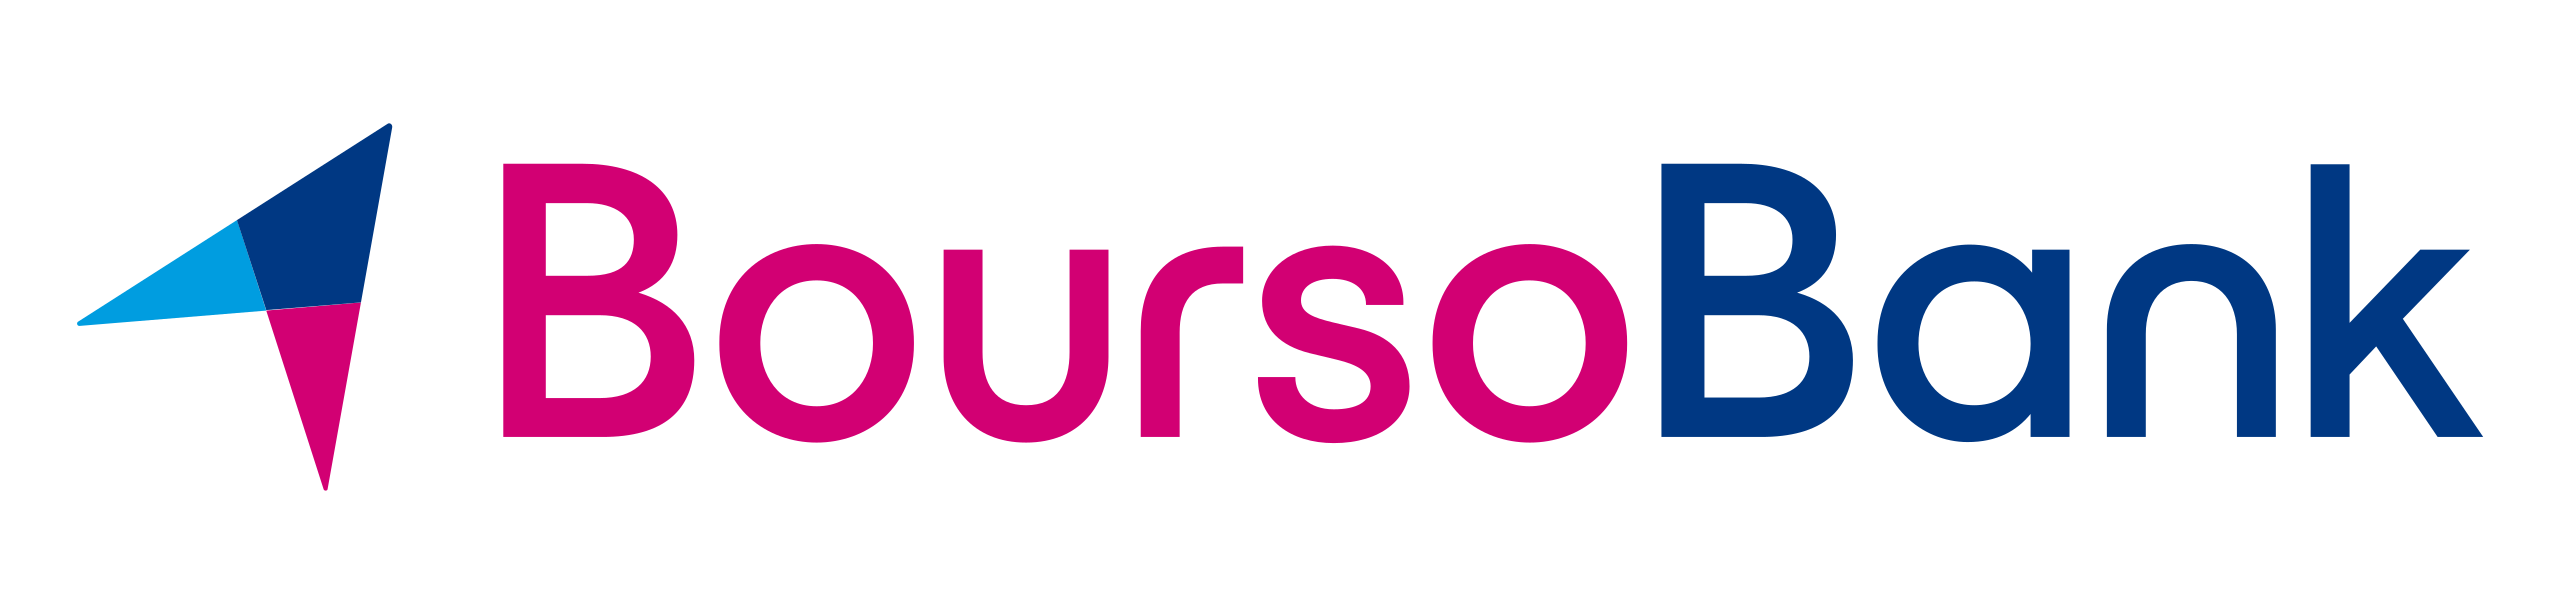 logo boursobank